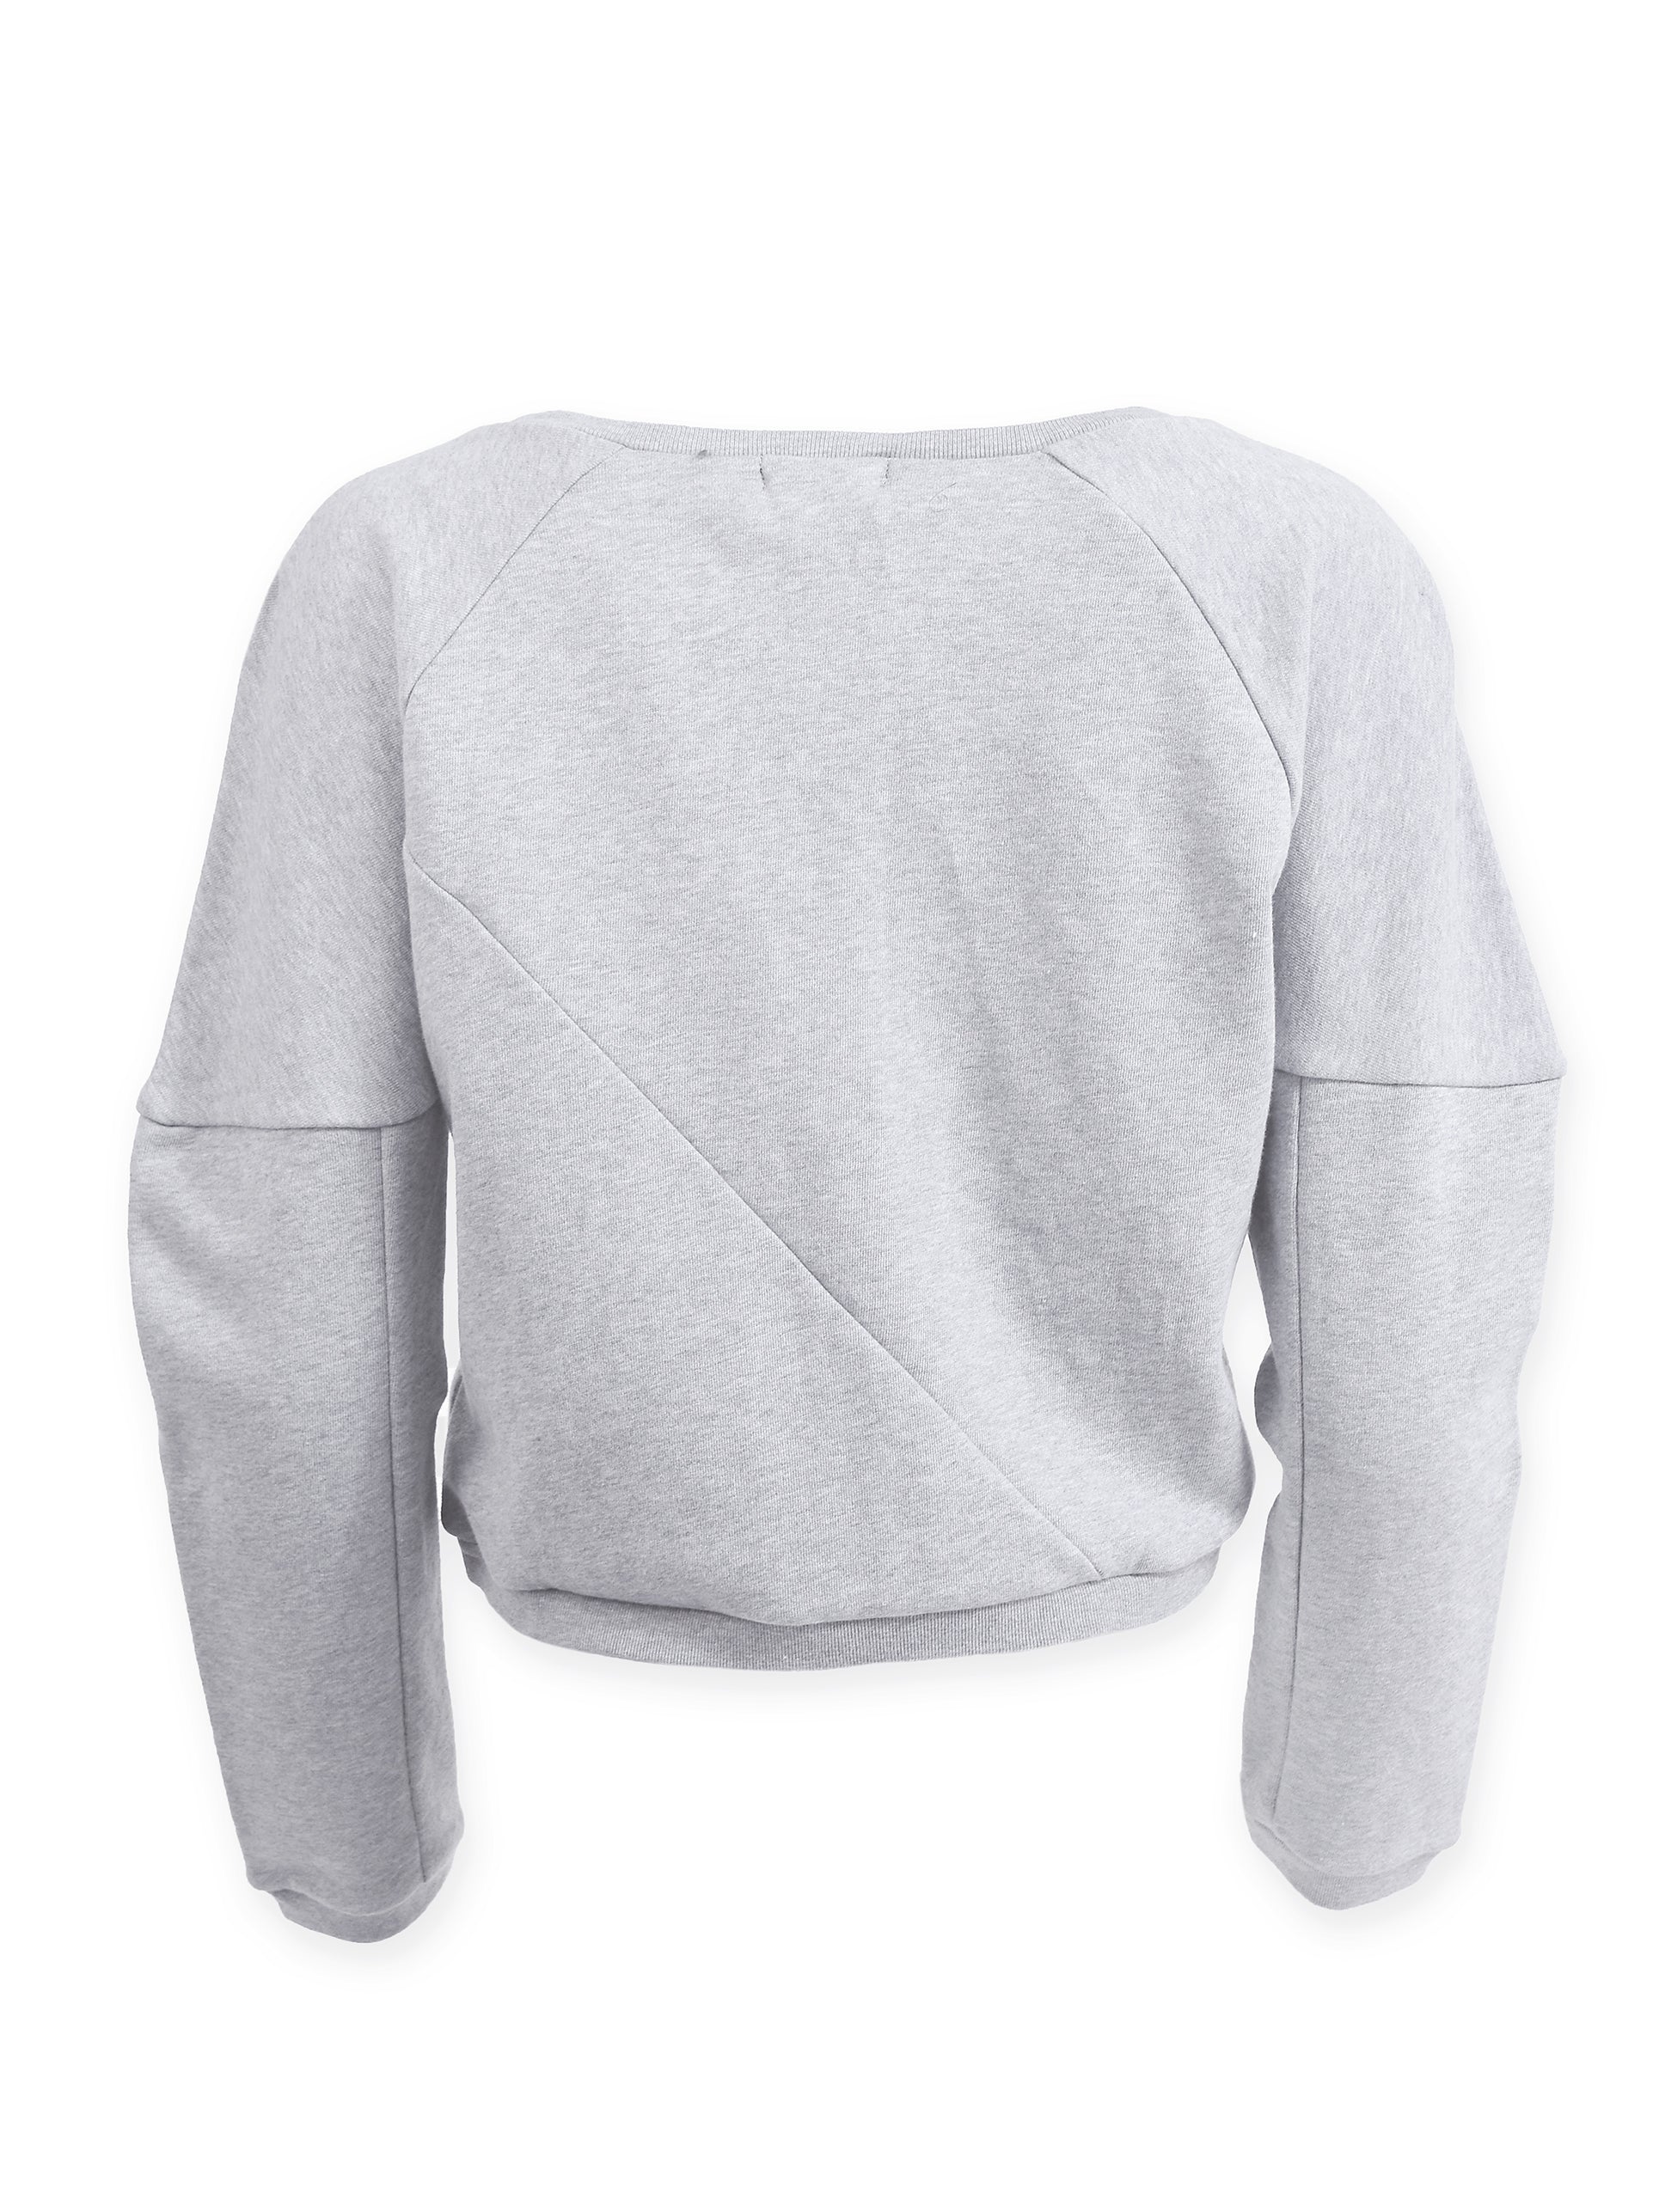 Cropped Sweatshirt in Grey